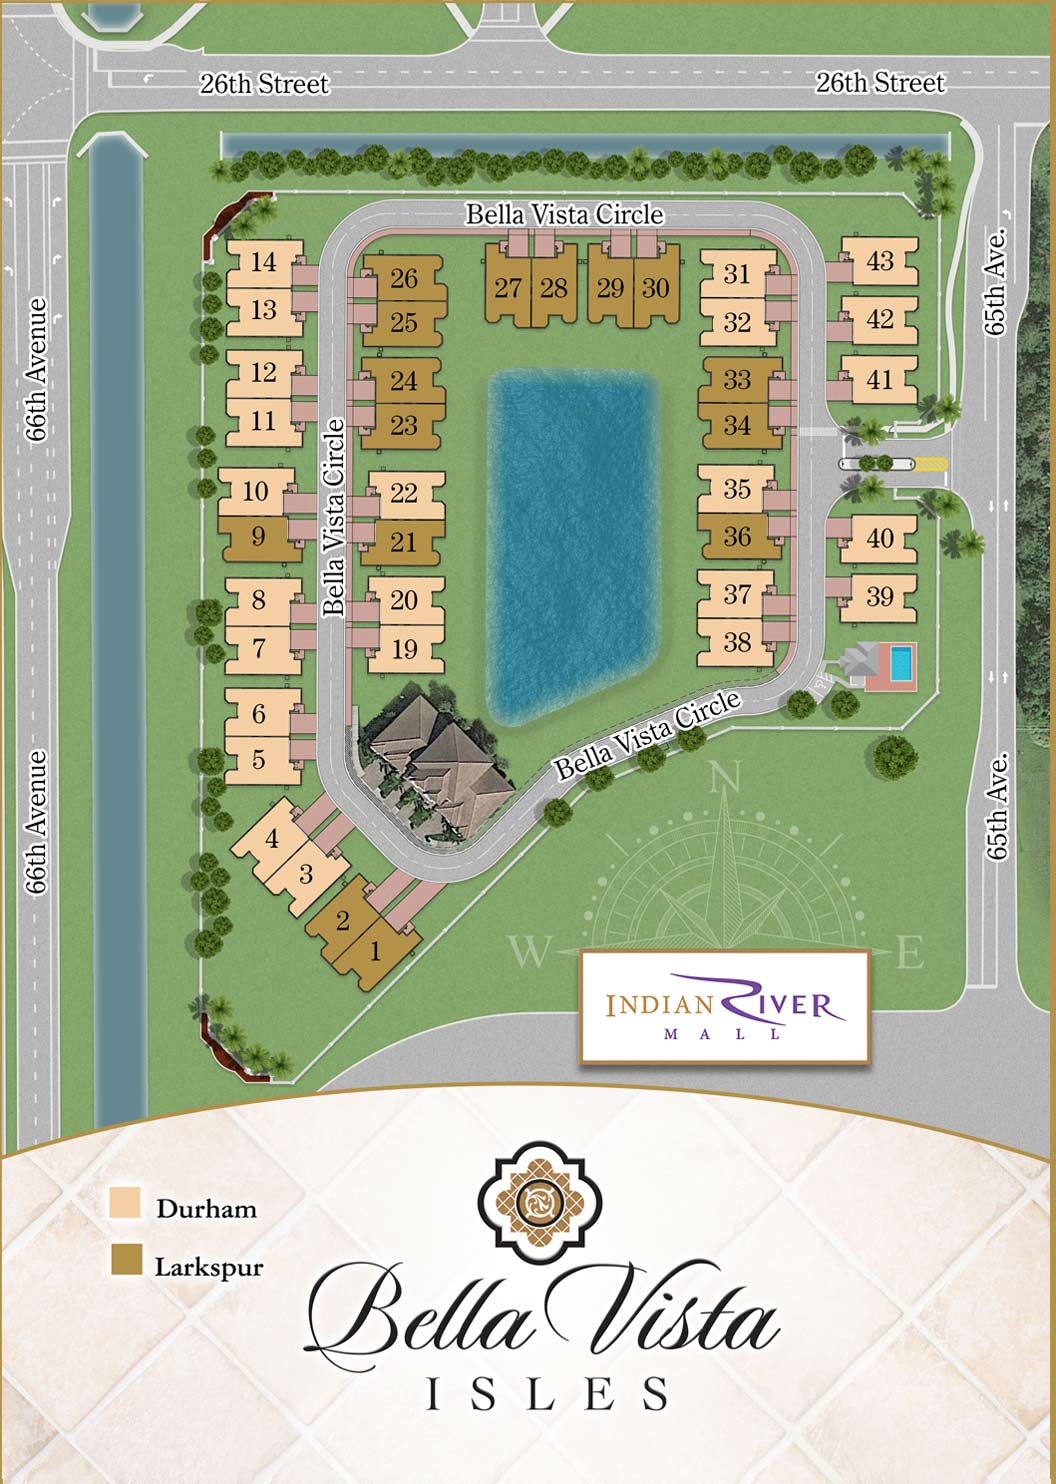 Bella Vista site plan